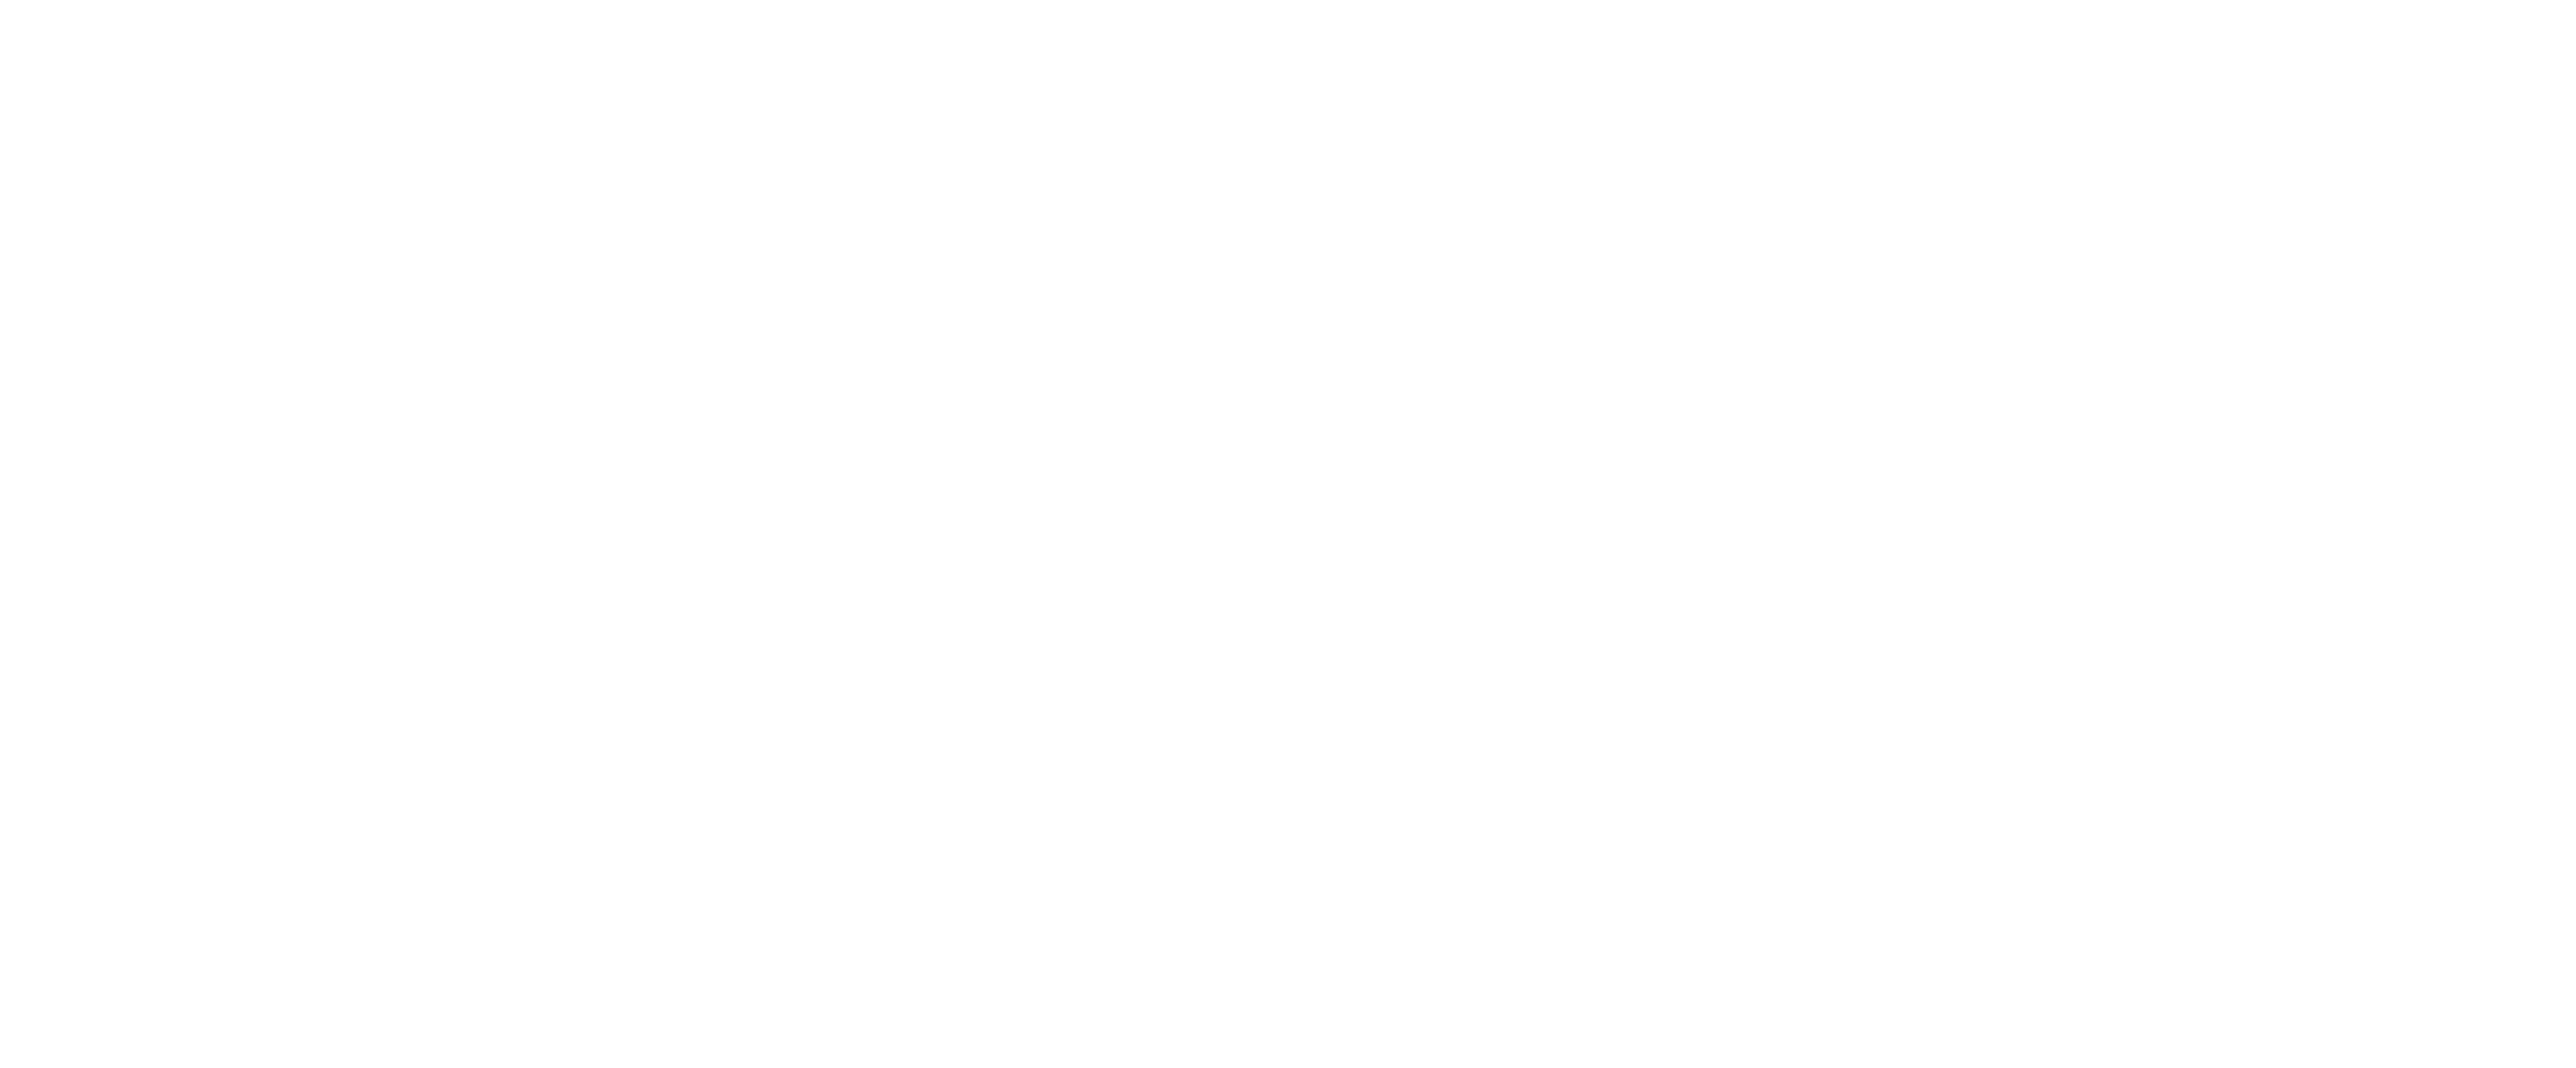 Rhystic Nostalgia Gaming